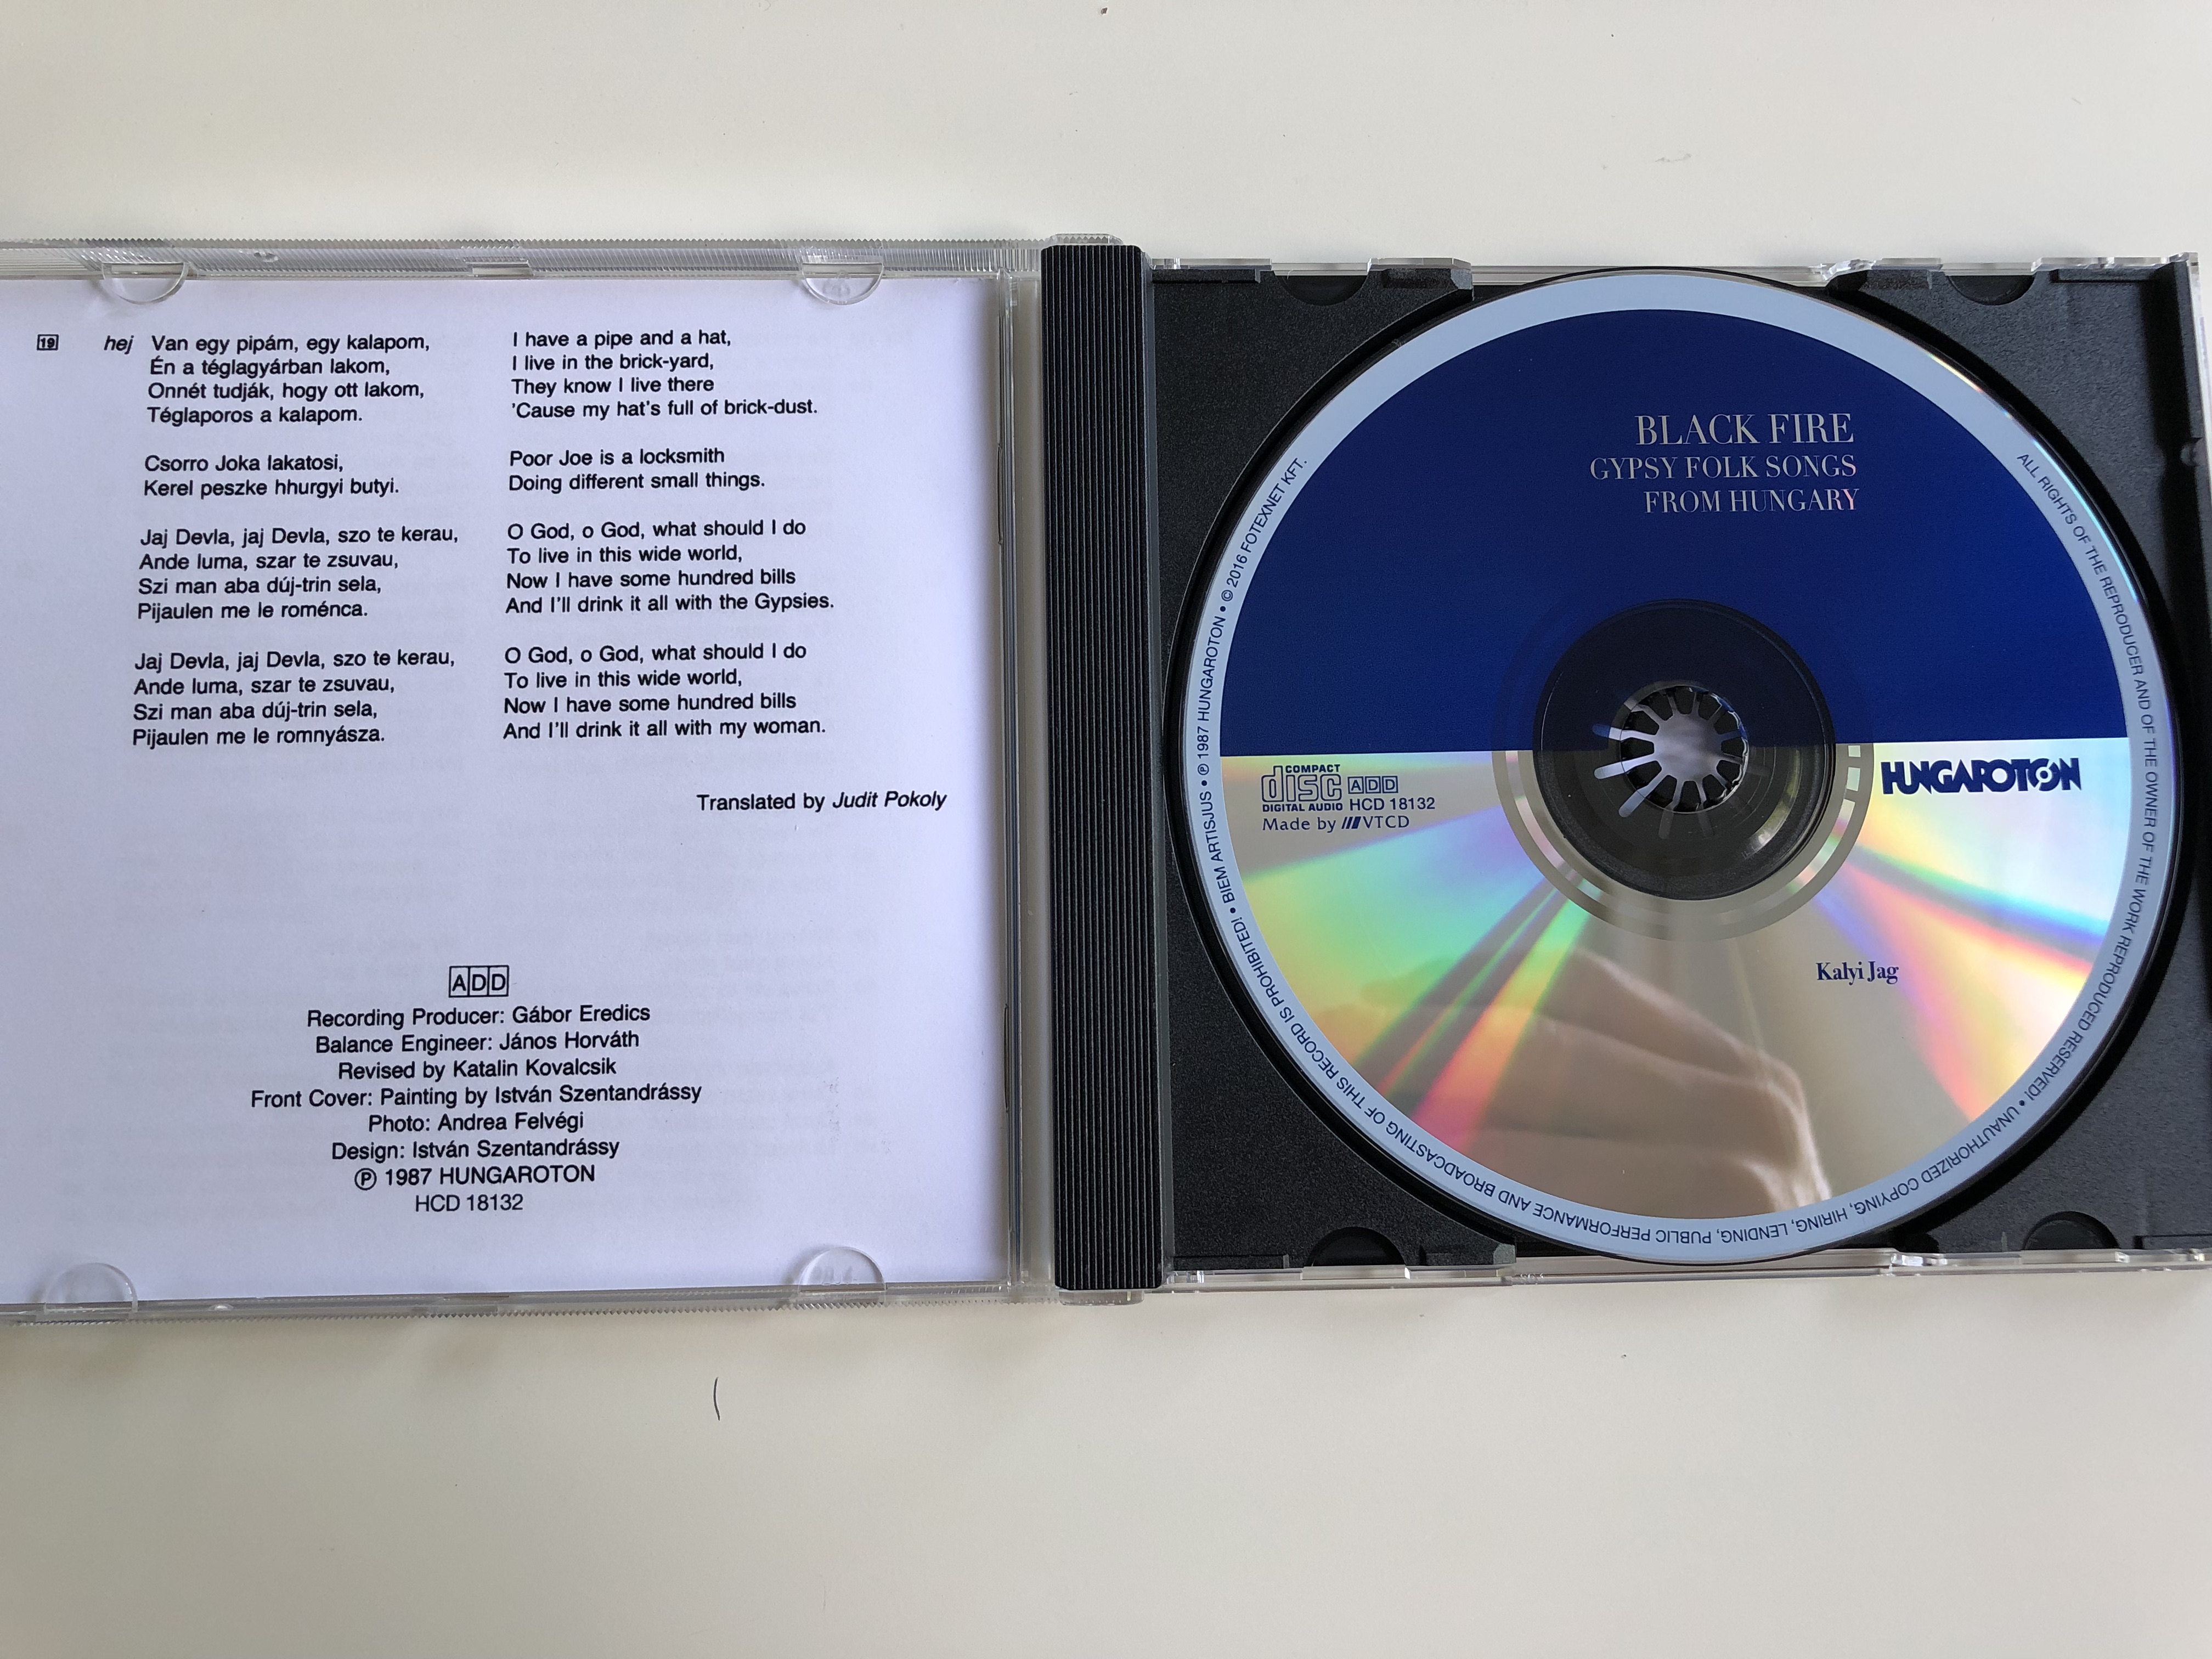 kalyi-jag-gypsy-folk-songs-from-hungary-audio-cd-2016-hungaroton-hcd-18132-8-.jpg